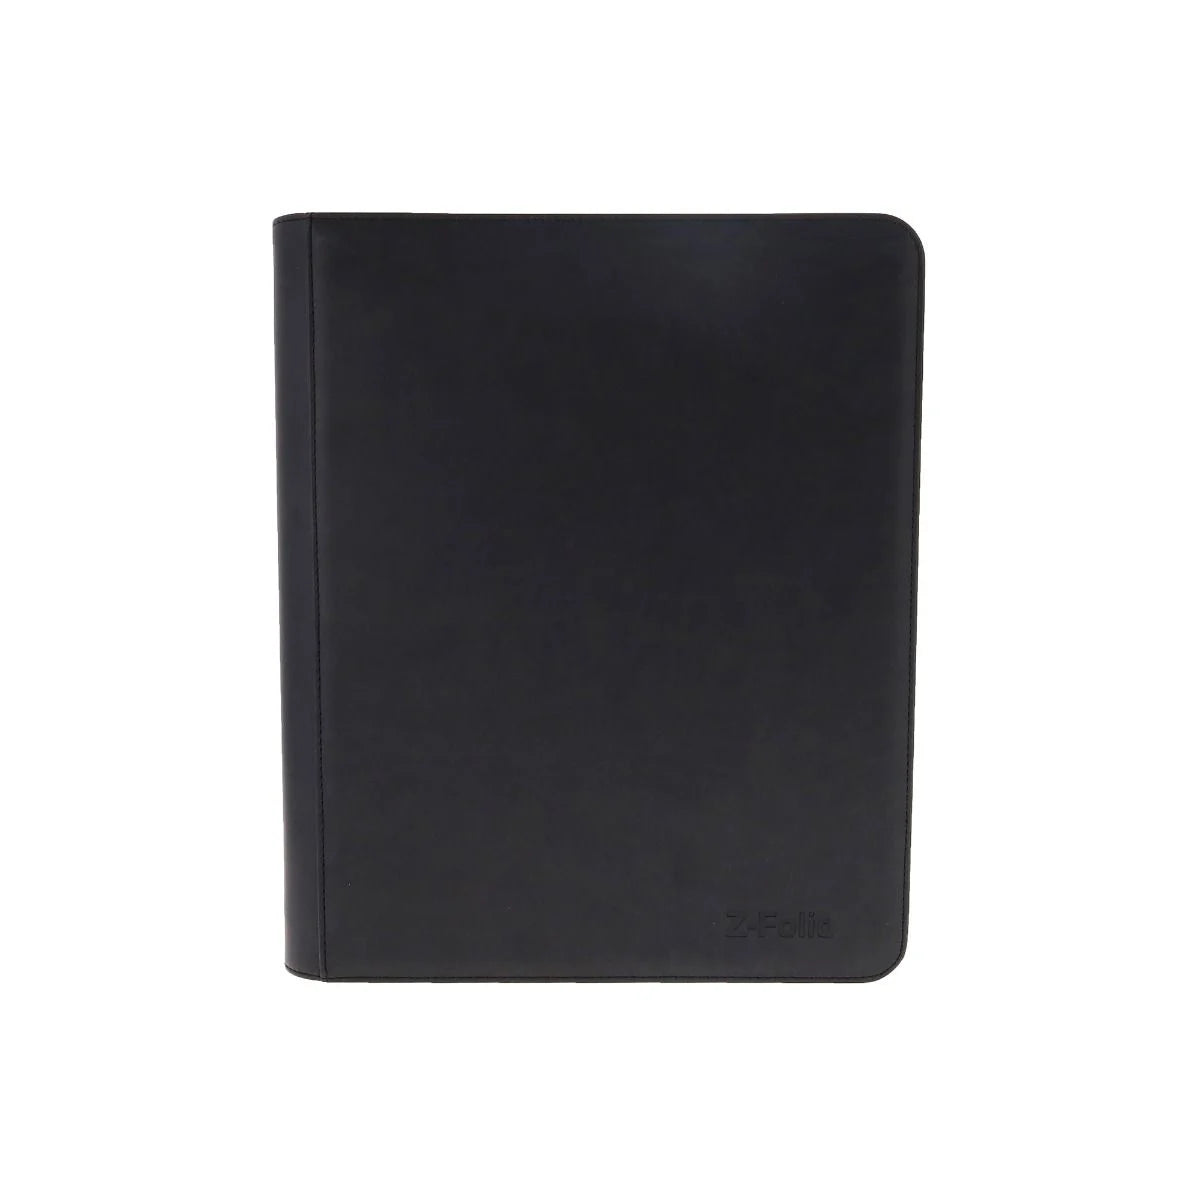 BCW - Z-Folio 9-Pocket LX Album - Toploaders - Black